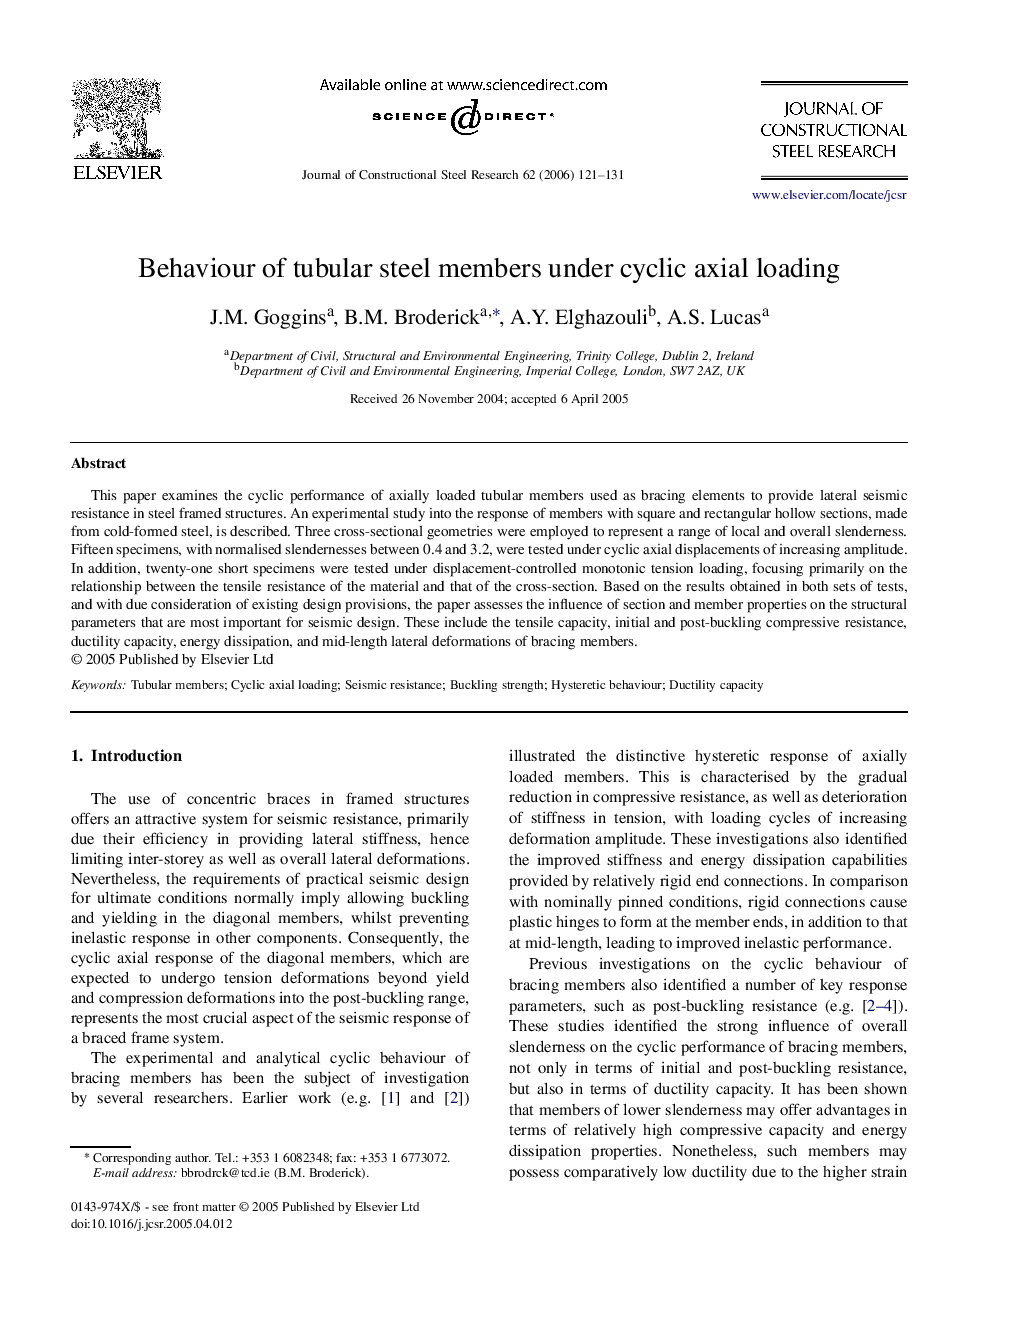 Behaviour of tubular steel members under cyclic axial loading